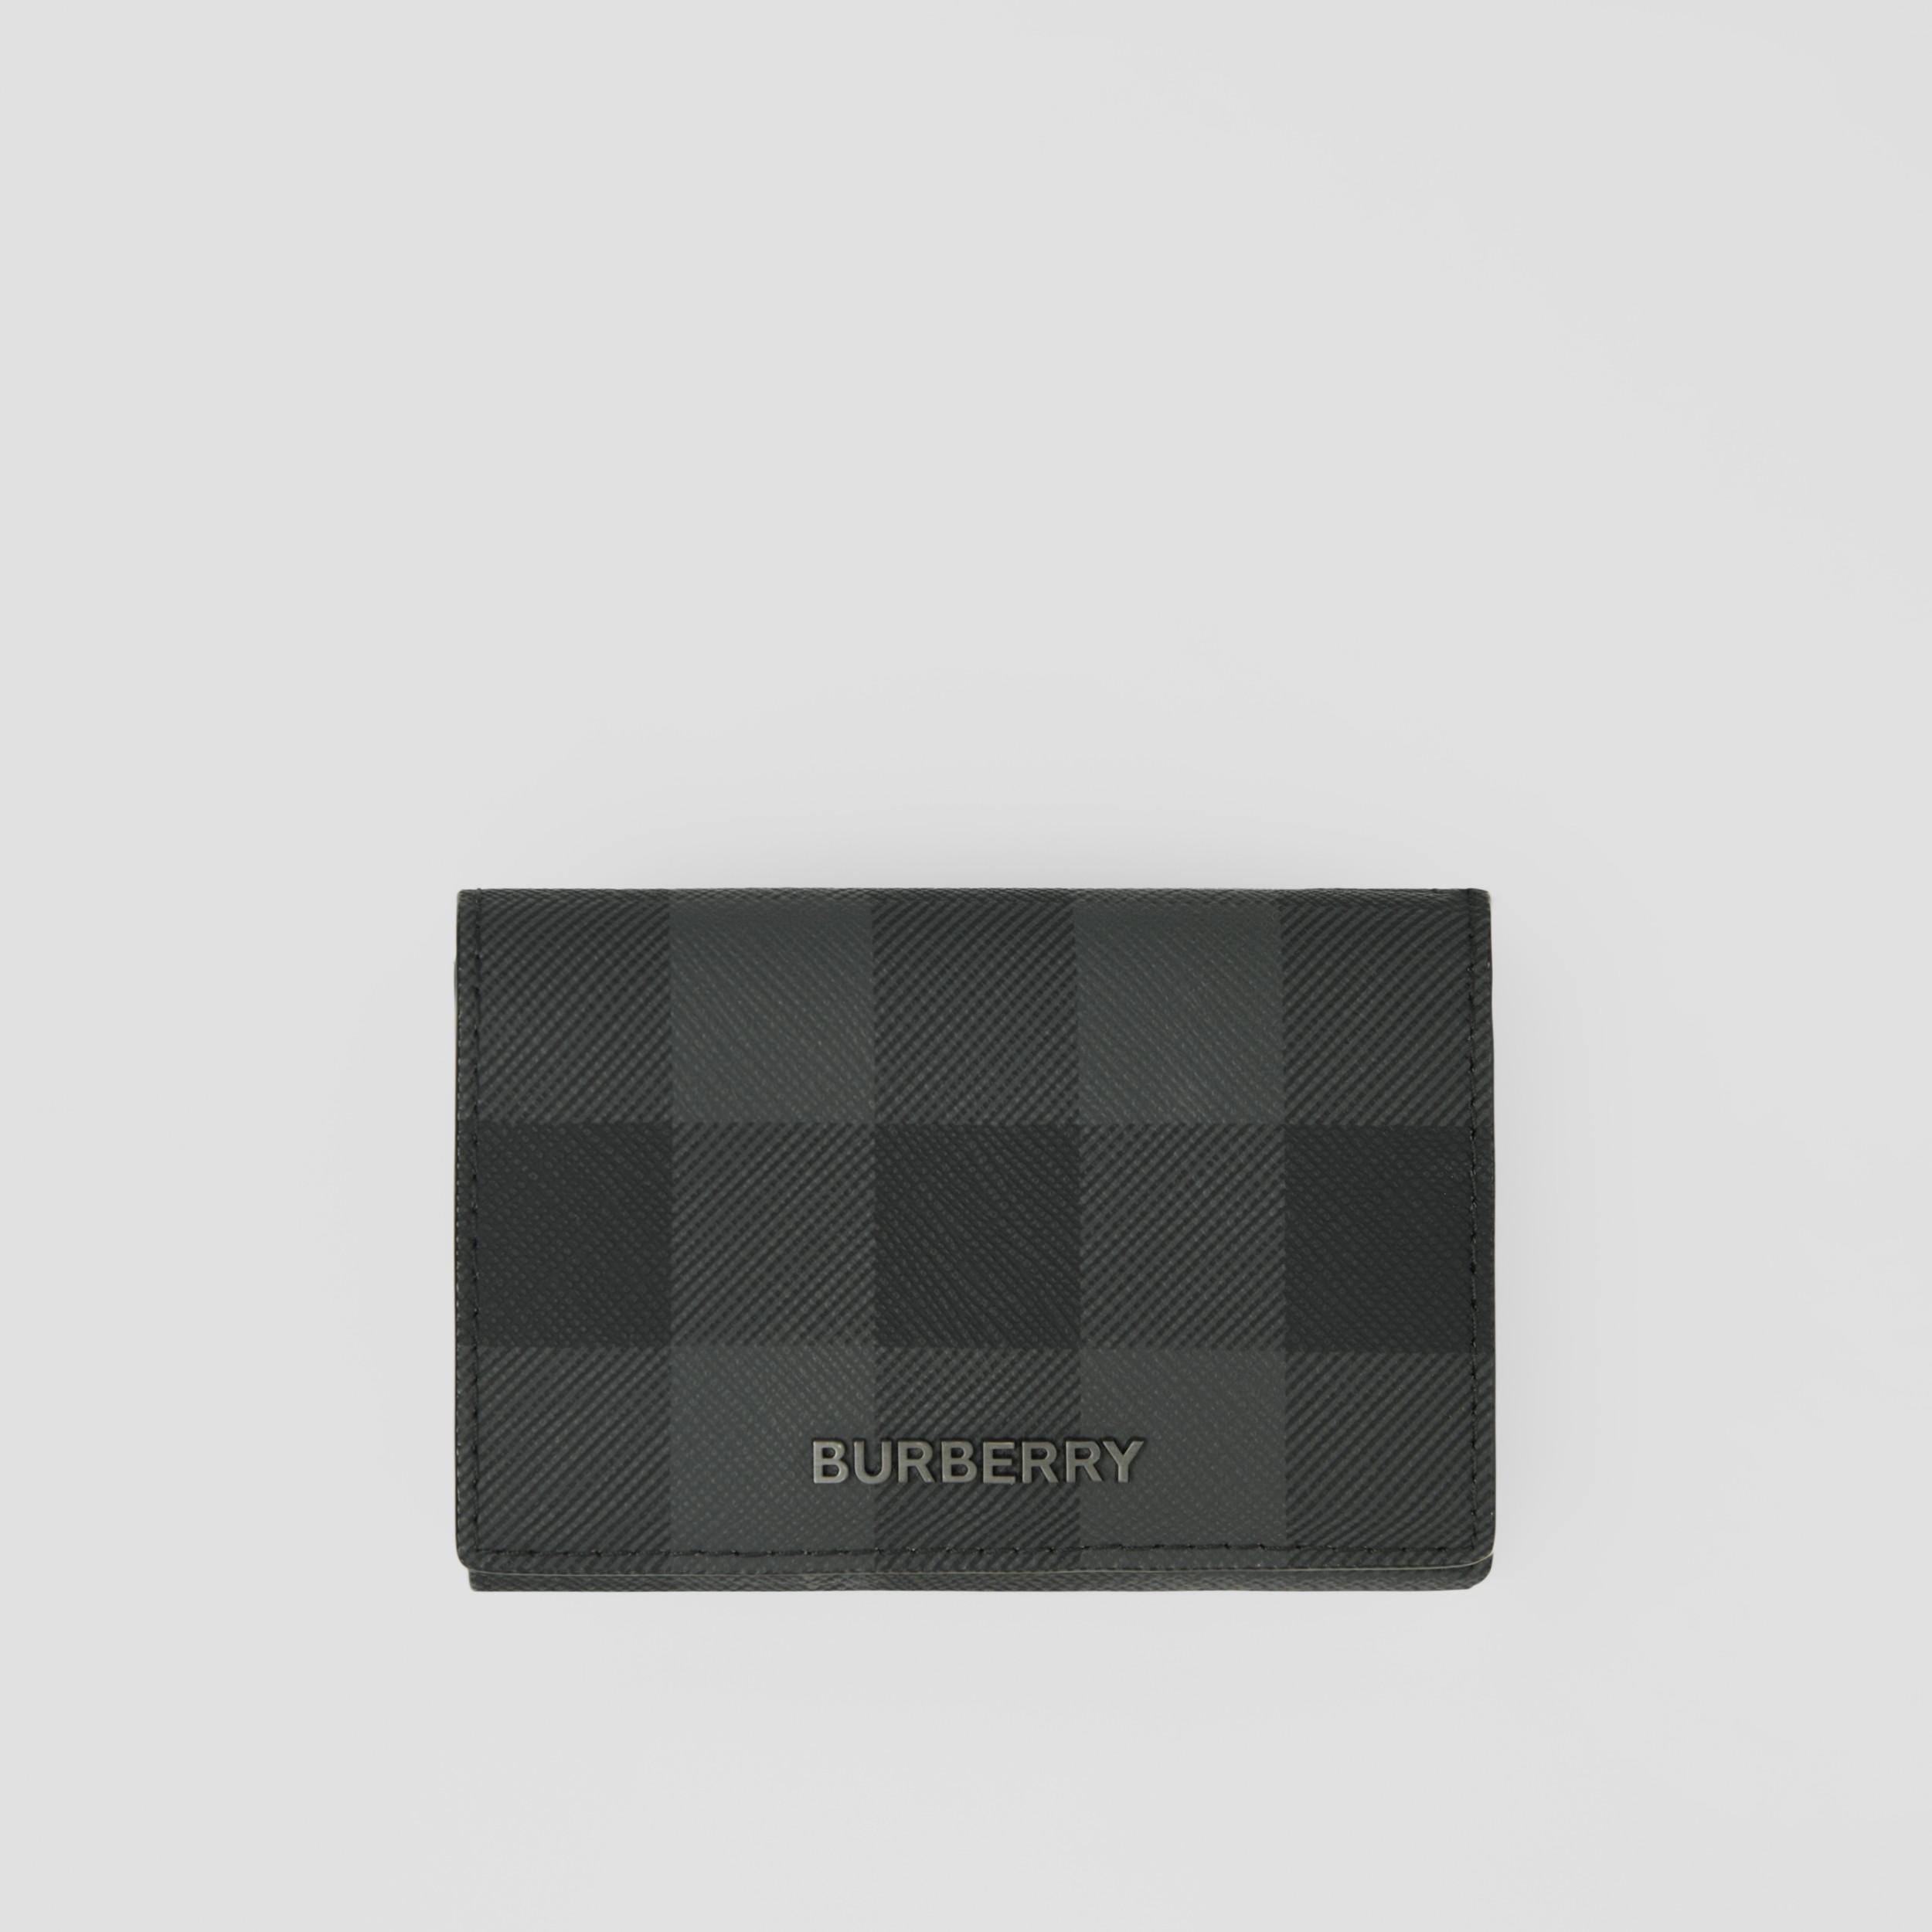 Actualizar 86+ imagen burberry mens trifold wallet